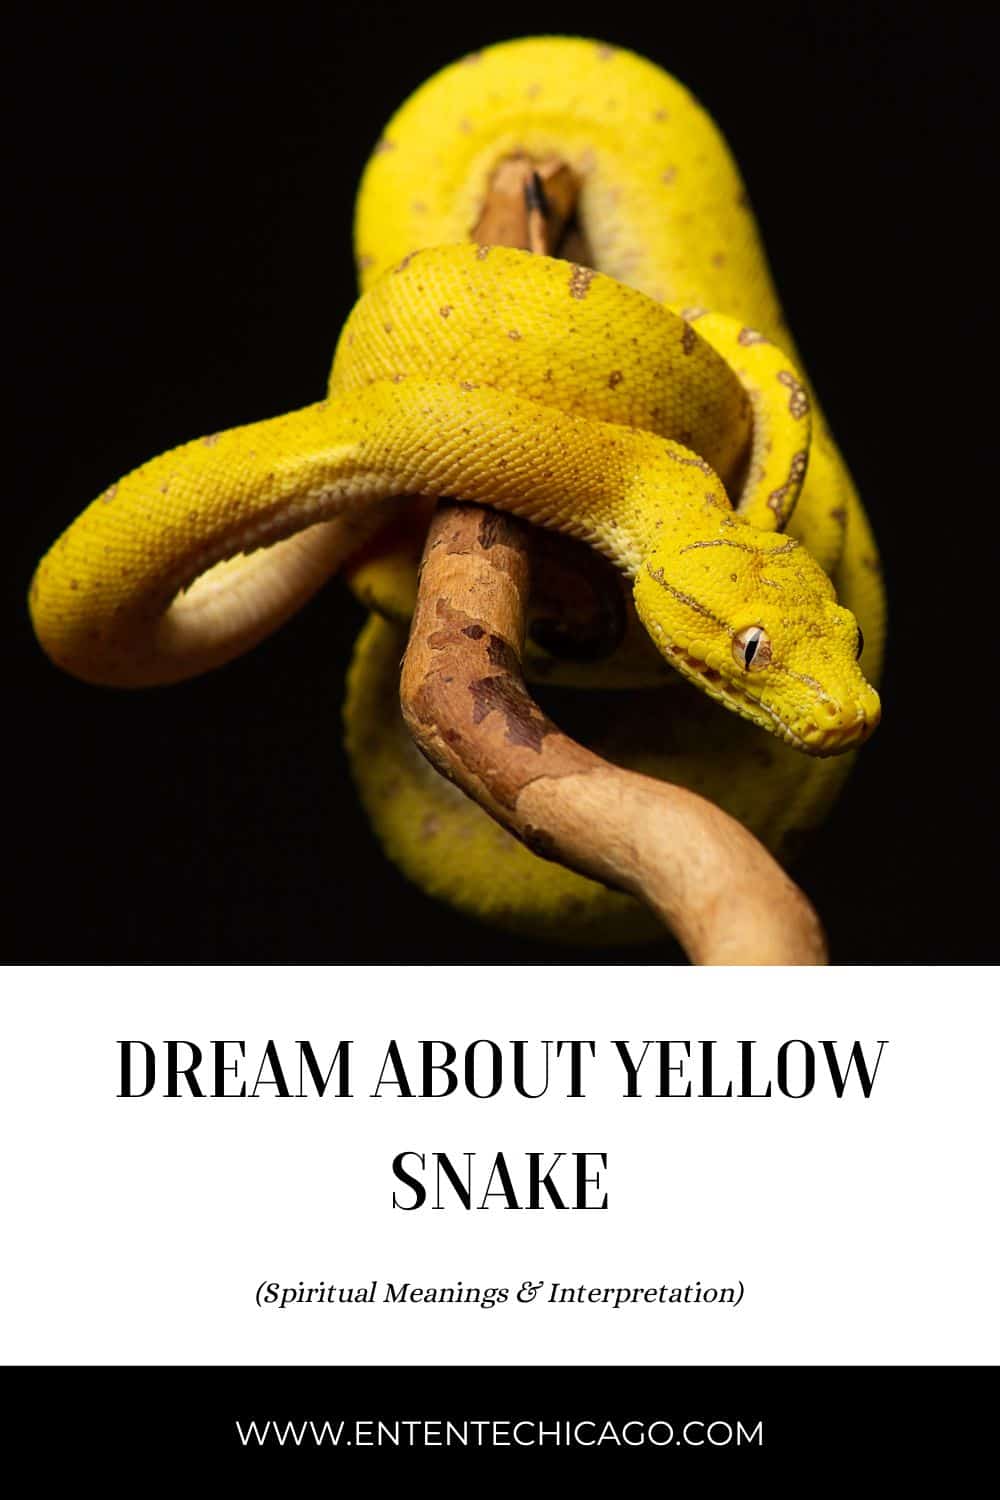  13 Yellow Snake Draumatúlkun